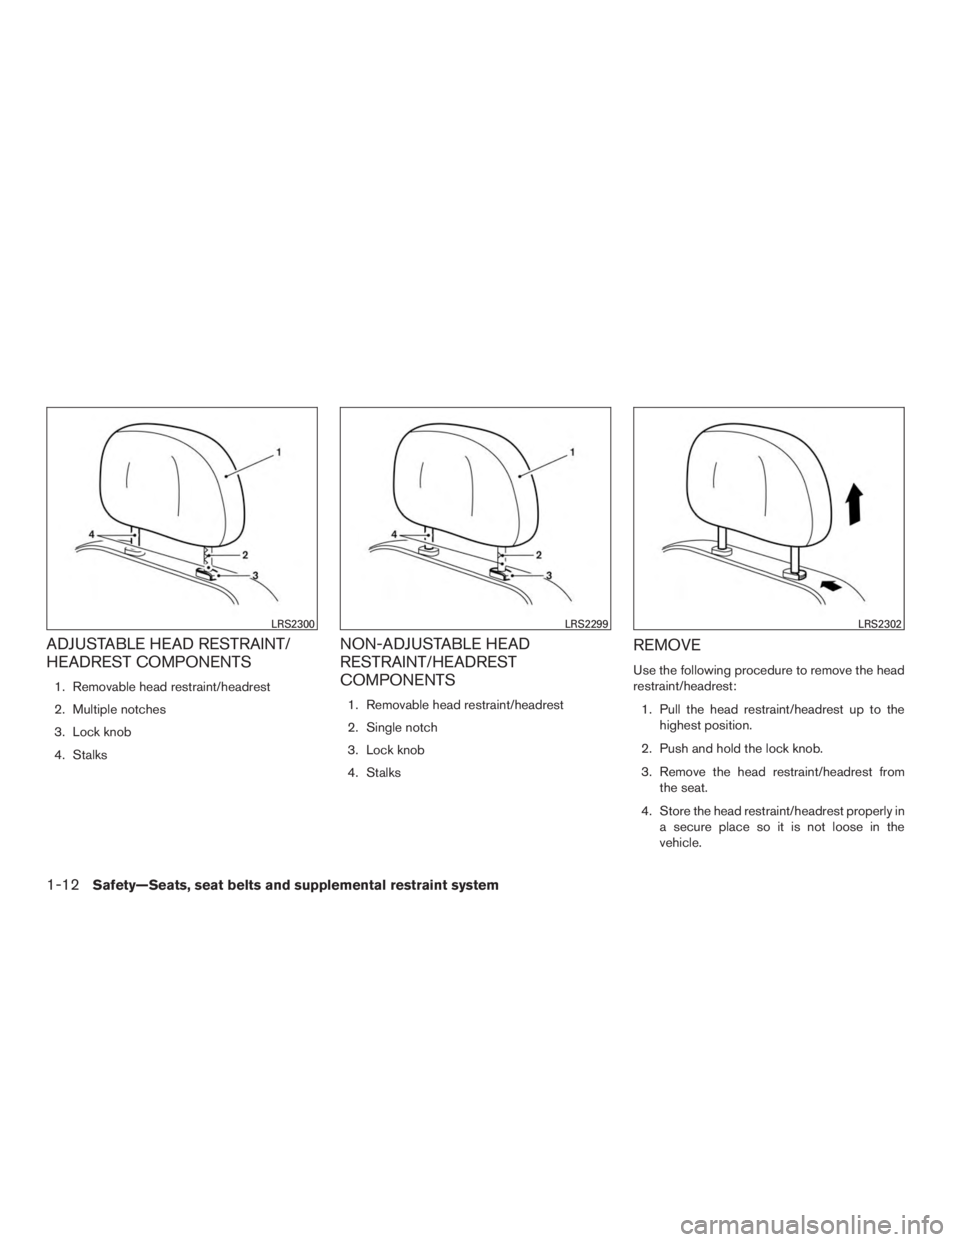 NISSAN ROGUE 2015  Owner´s Manual ADJUSTABLE HEAD RESTRAINT/
HEADREST COMPONENTS
1. Removable head restraint/headrest
2. Multiple notches
3. Lock knob
4. Stalks
NON-ADJUSTABLE HEAD
RESTRAINT/HEADREST
COMPONENTS
1. Removable head restr